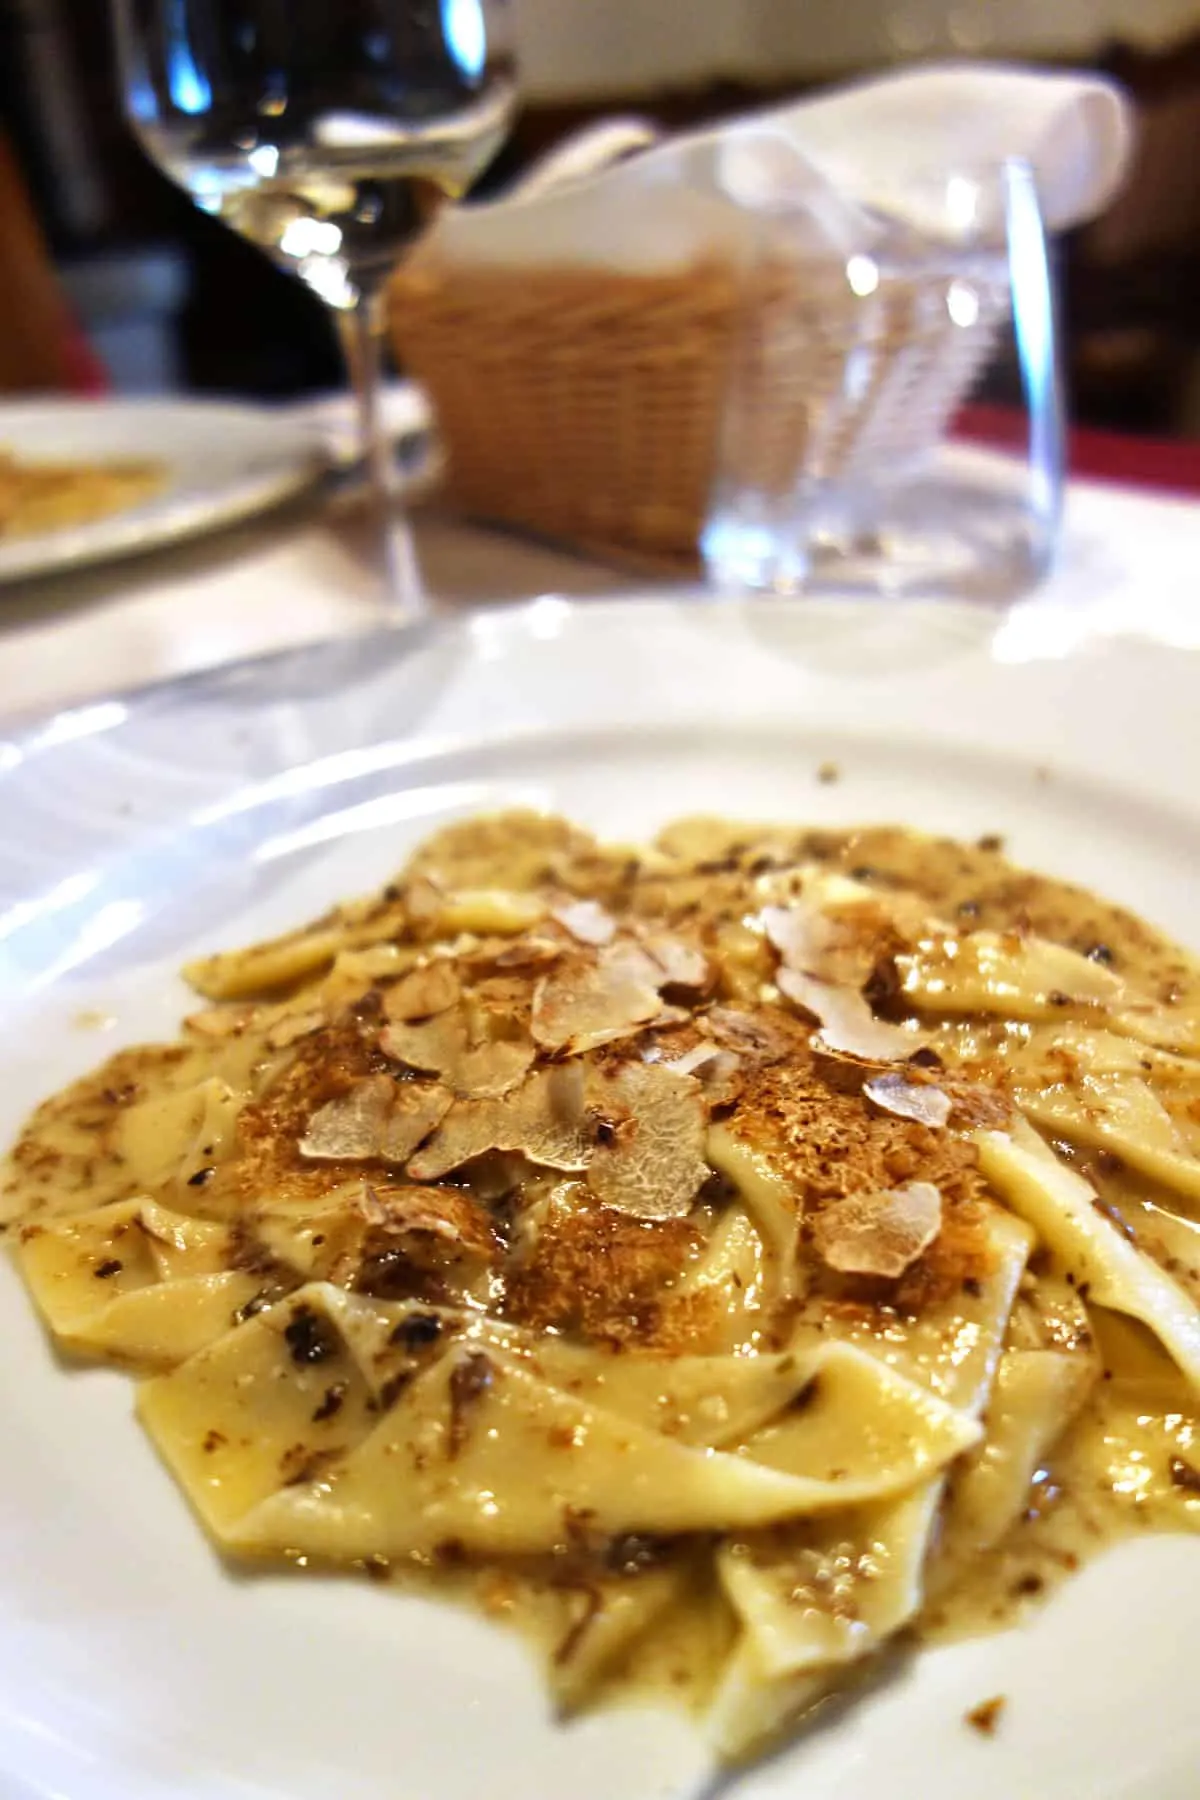 Fuzi, a popular quill-shaped homemade pasta in Croatia